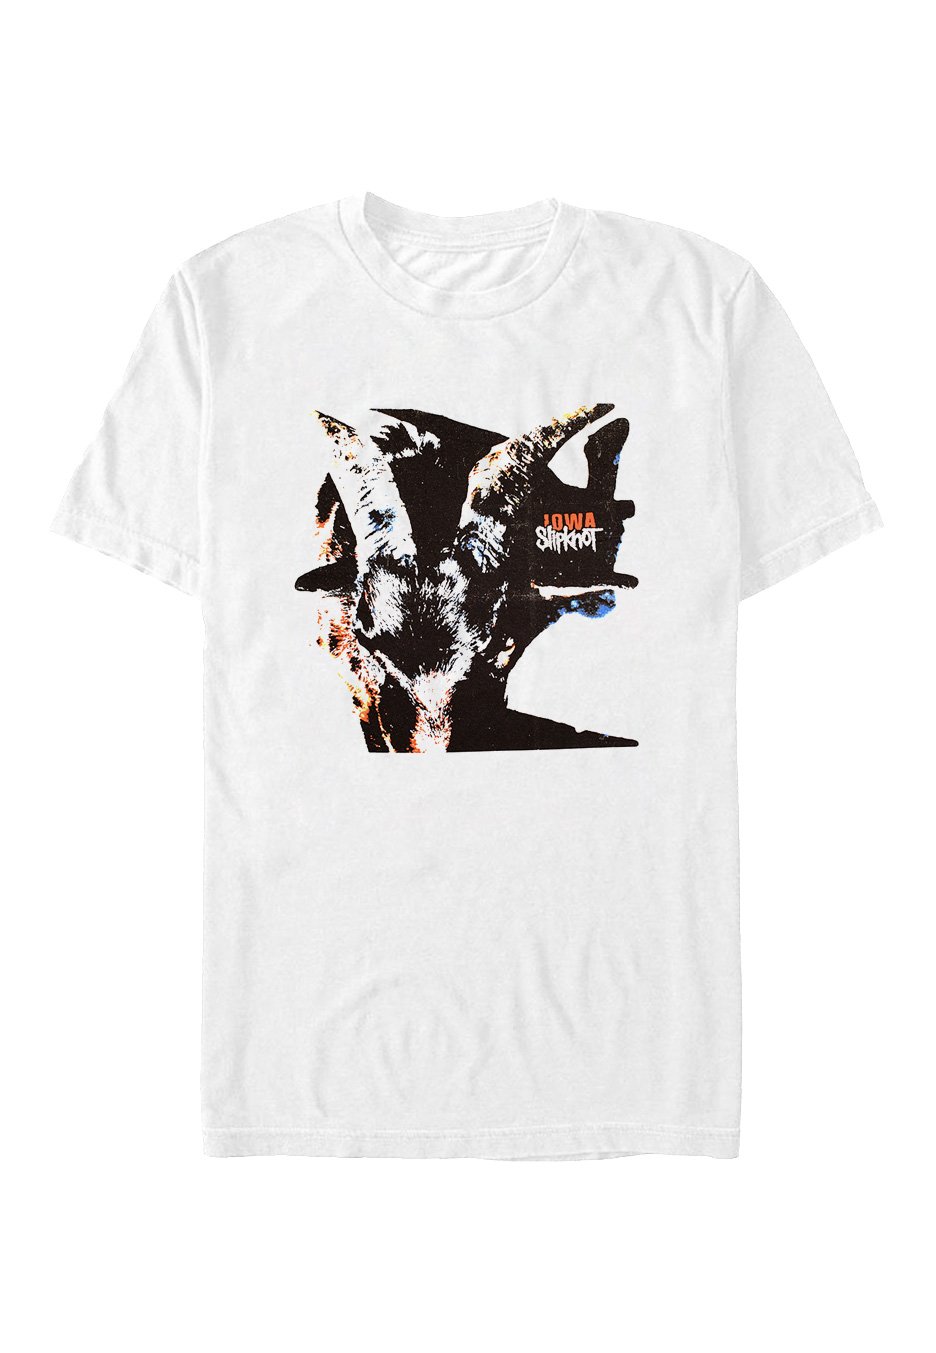 Slipknot - Iowa Goat Shadow White - T-Shirt